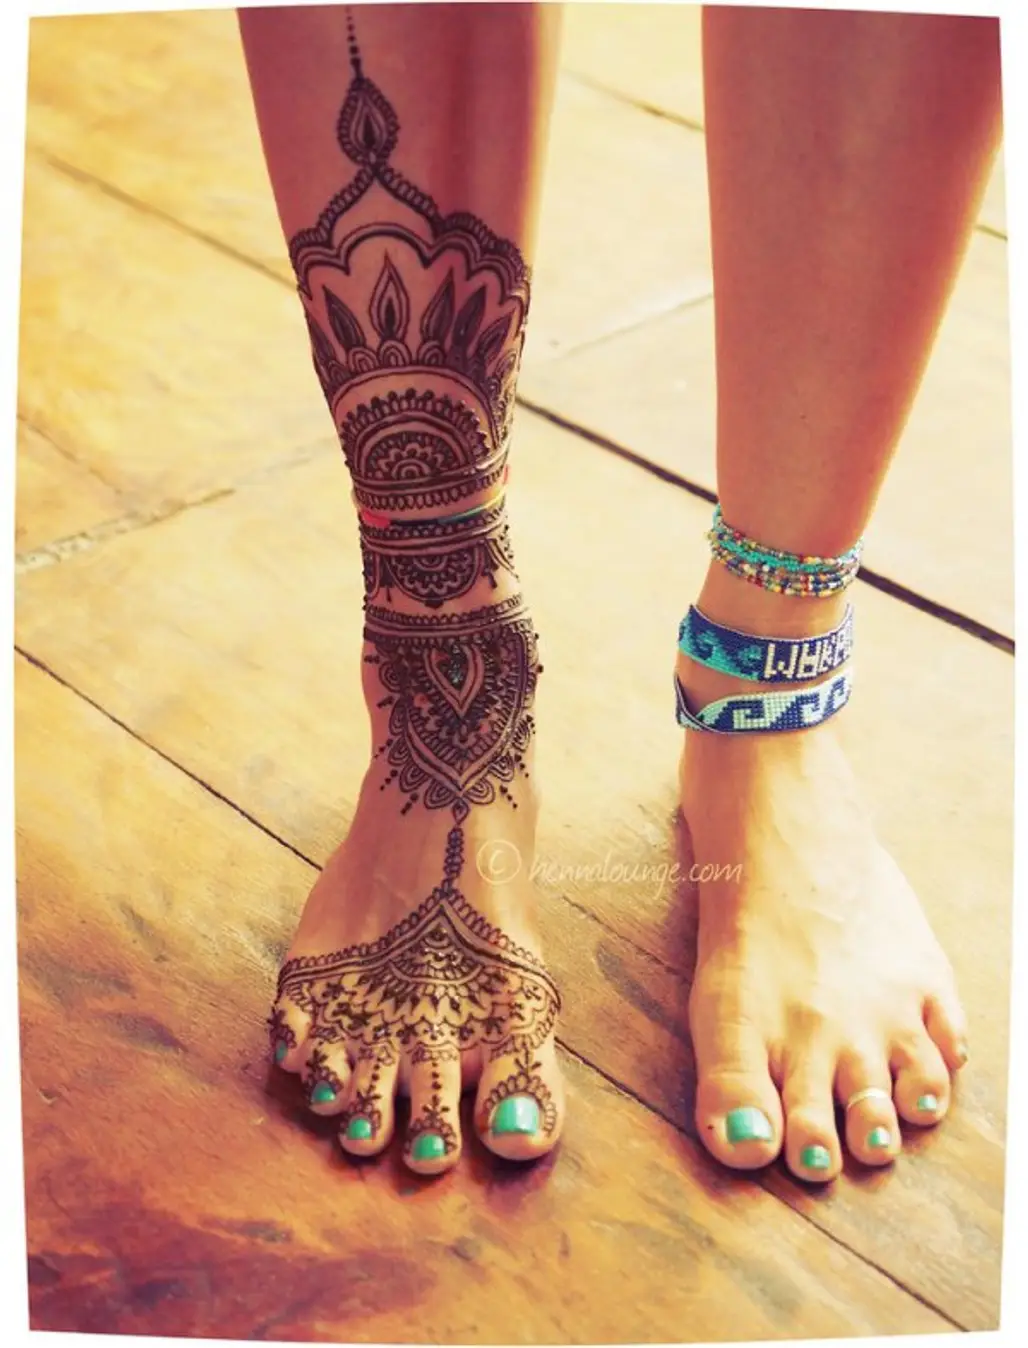 updating the tattoo portfolio with one of my recent henna inspired tat... |  TikTok